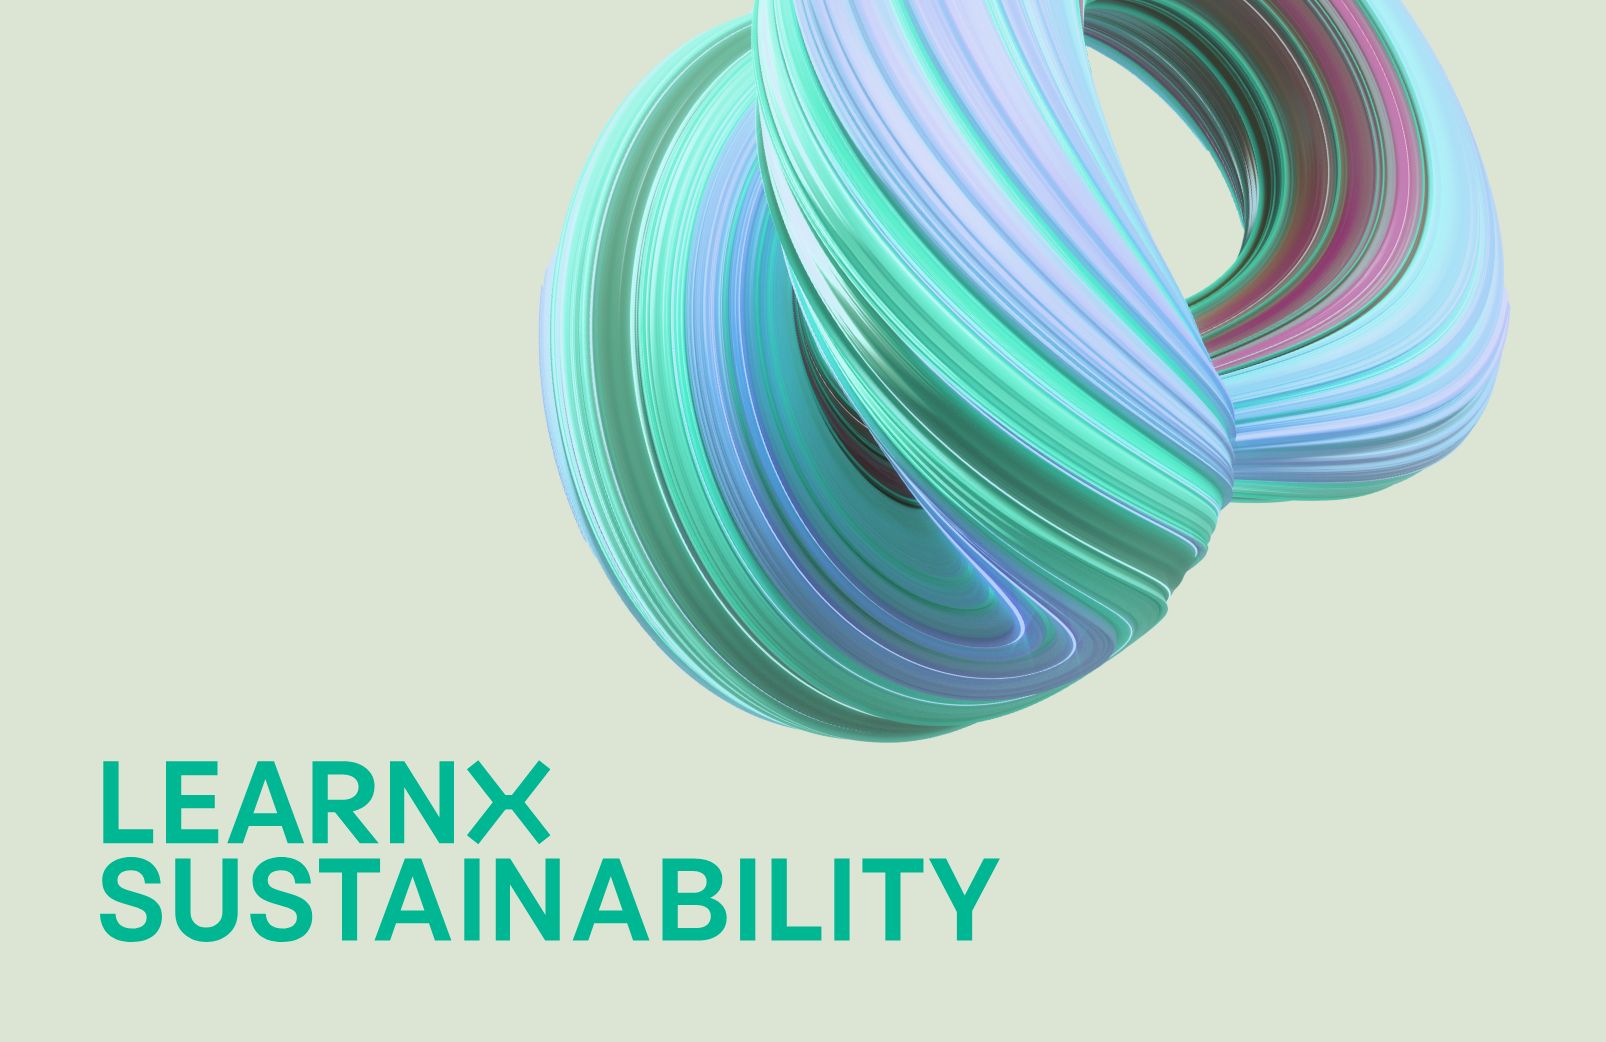 LearnX Sustainability